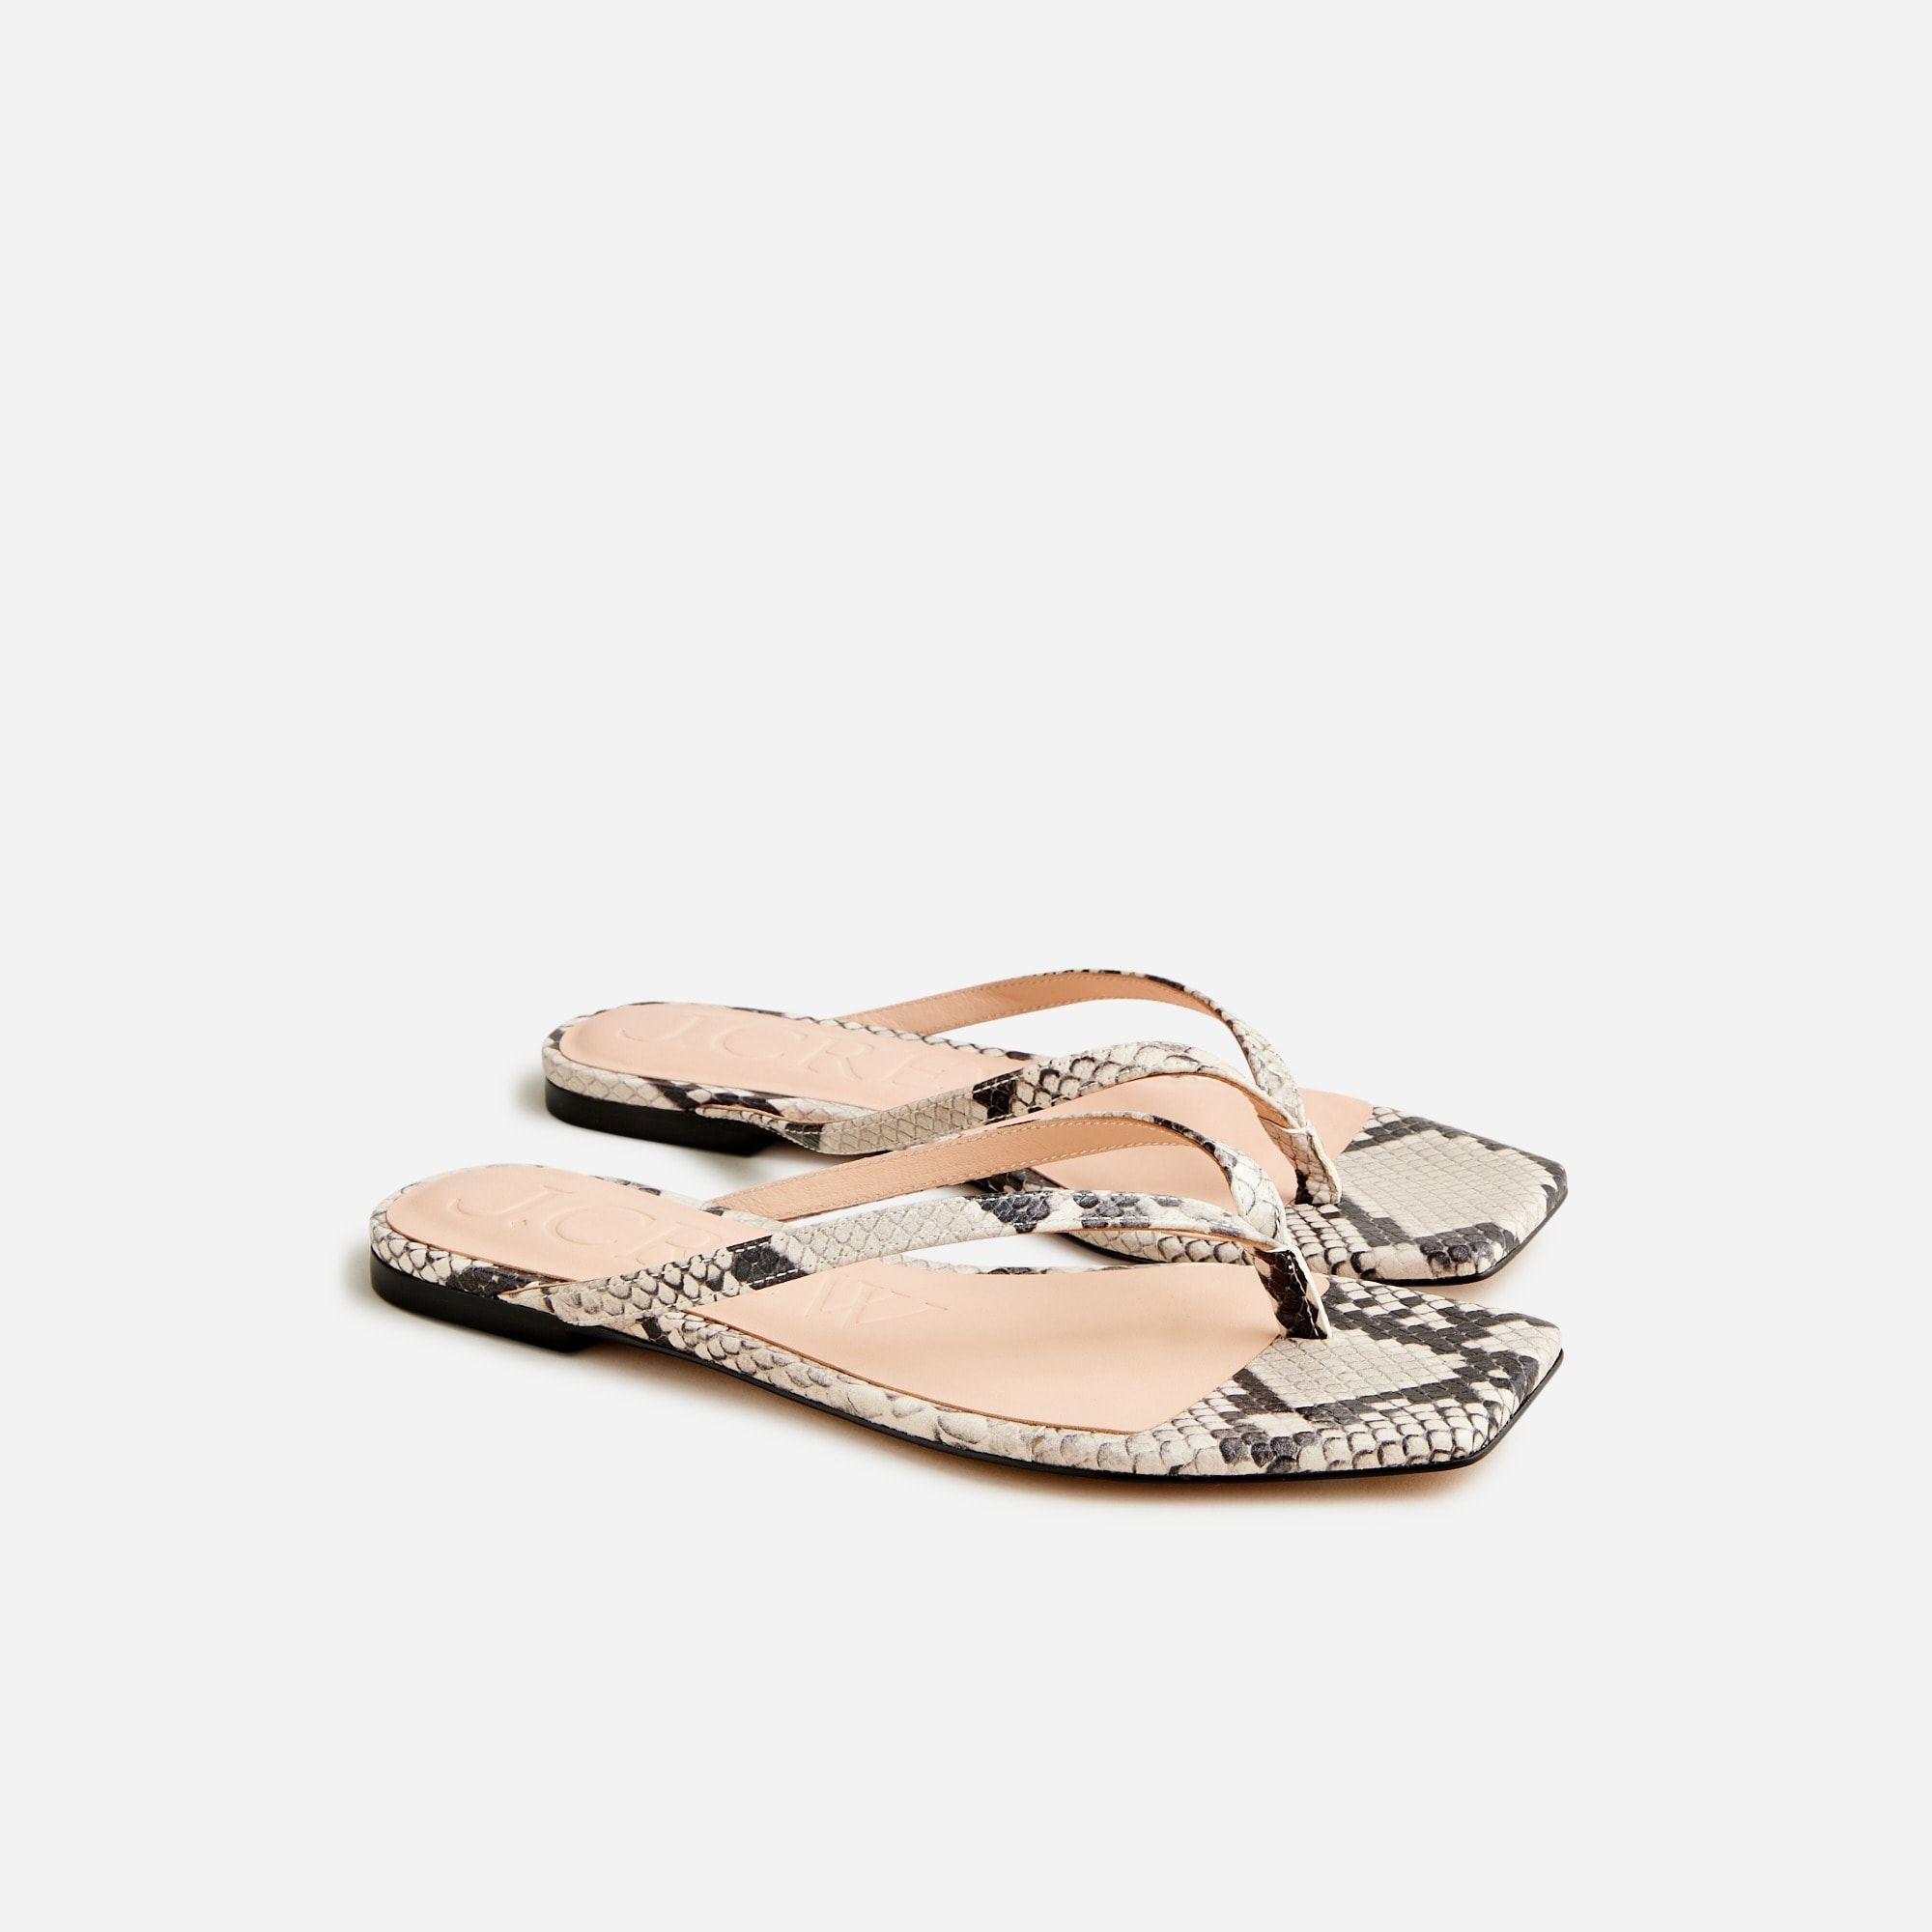 Jcrew New Capri thong sandals in metallic leather